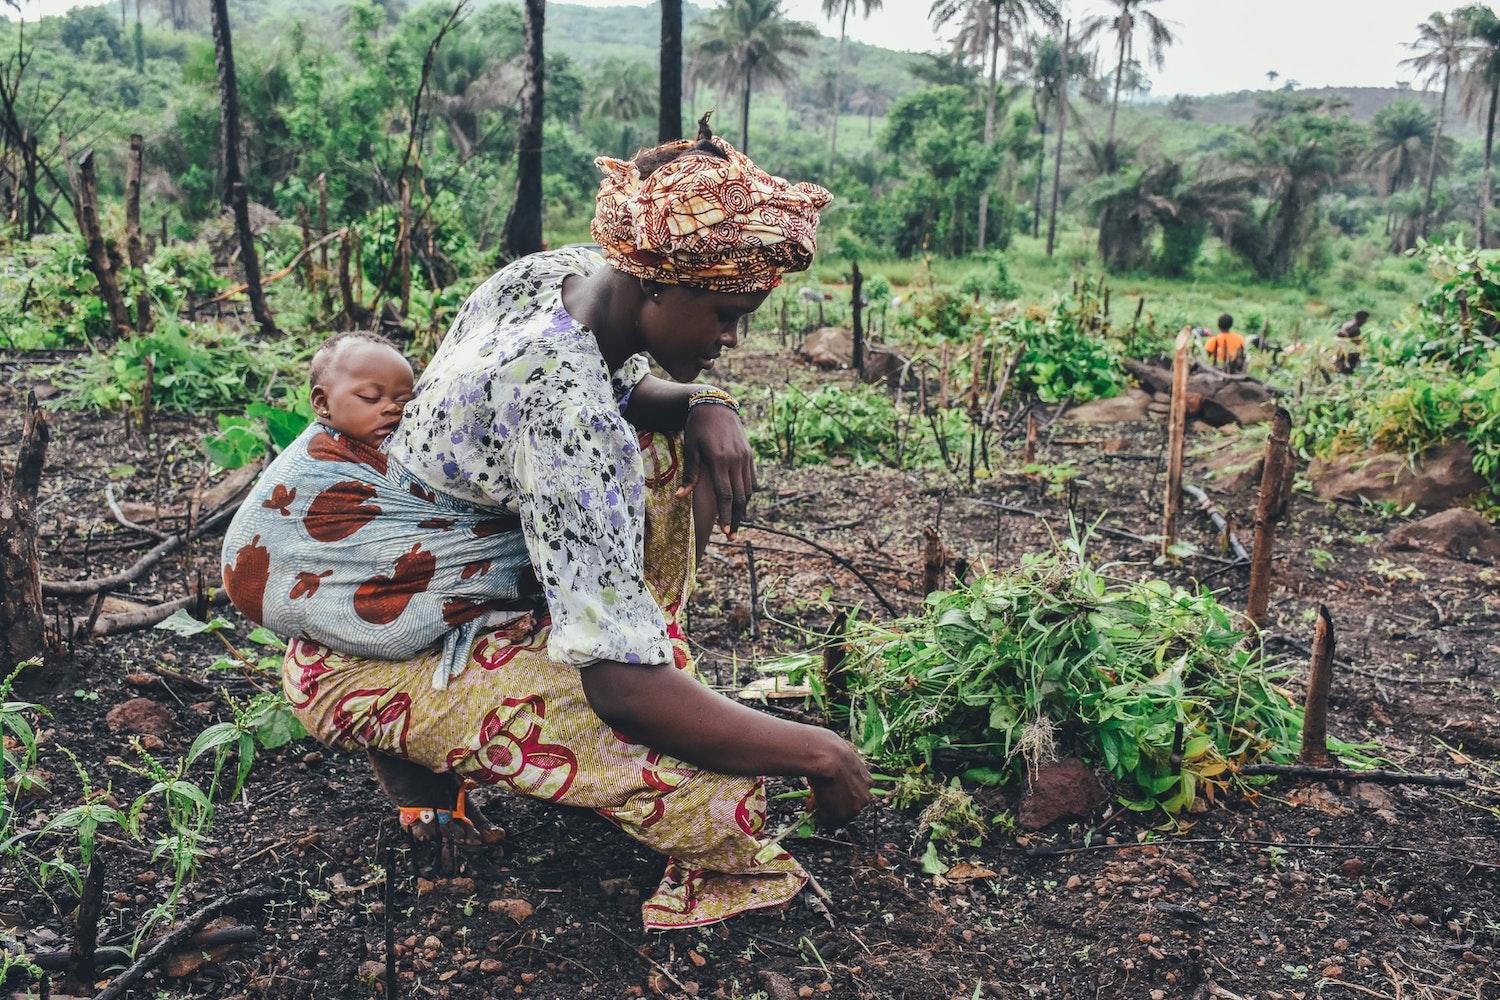 Women Smallholder Farmers Are Not Getting Their Fair Share